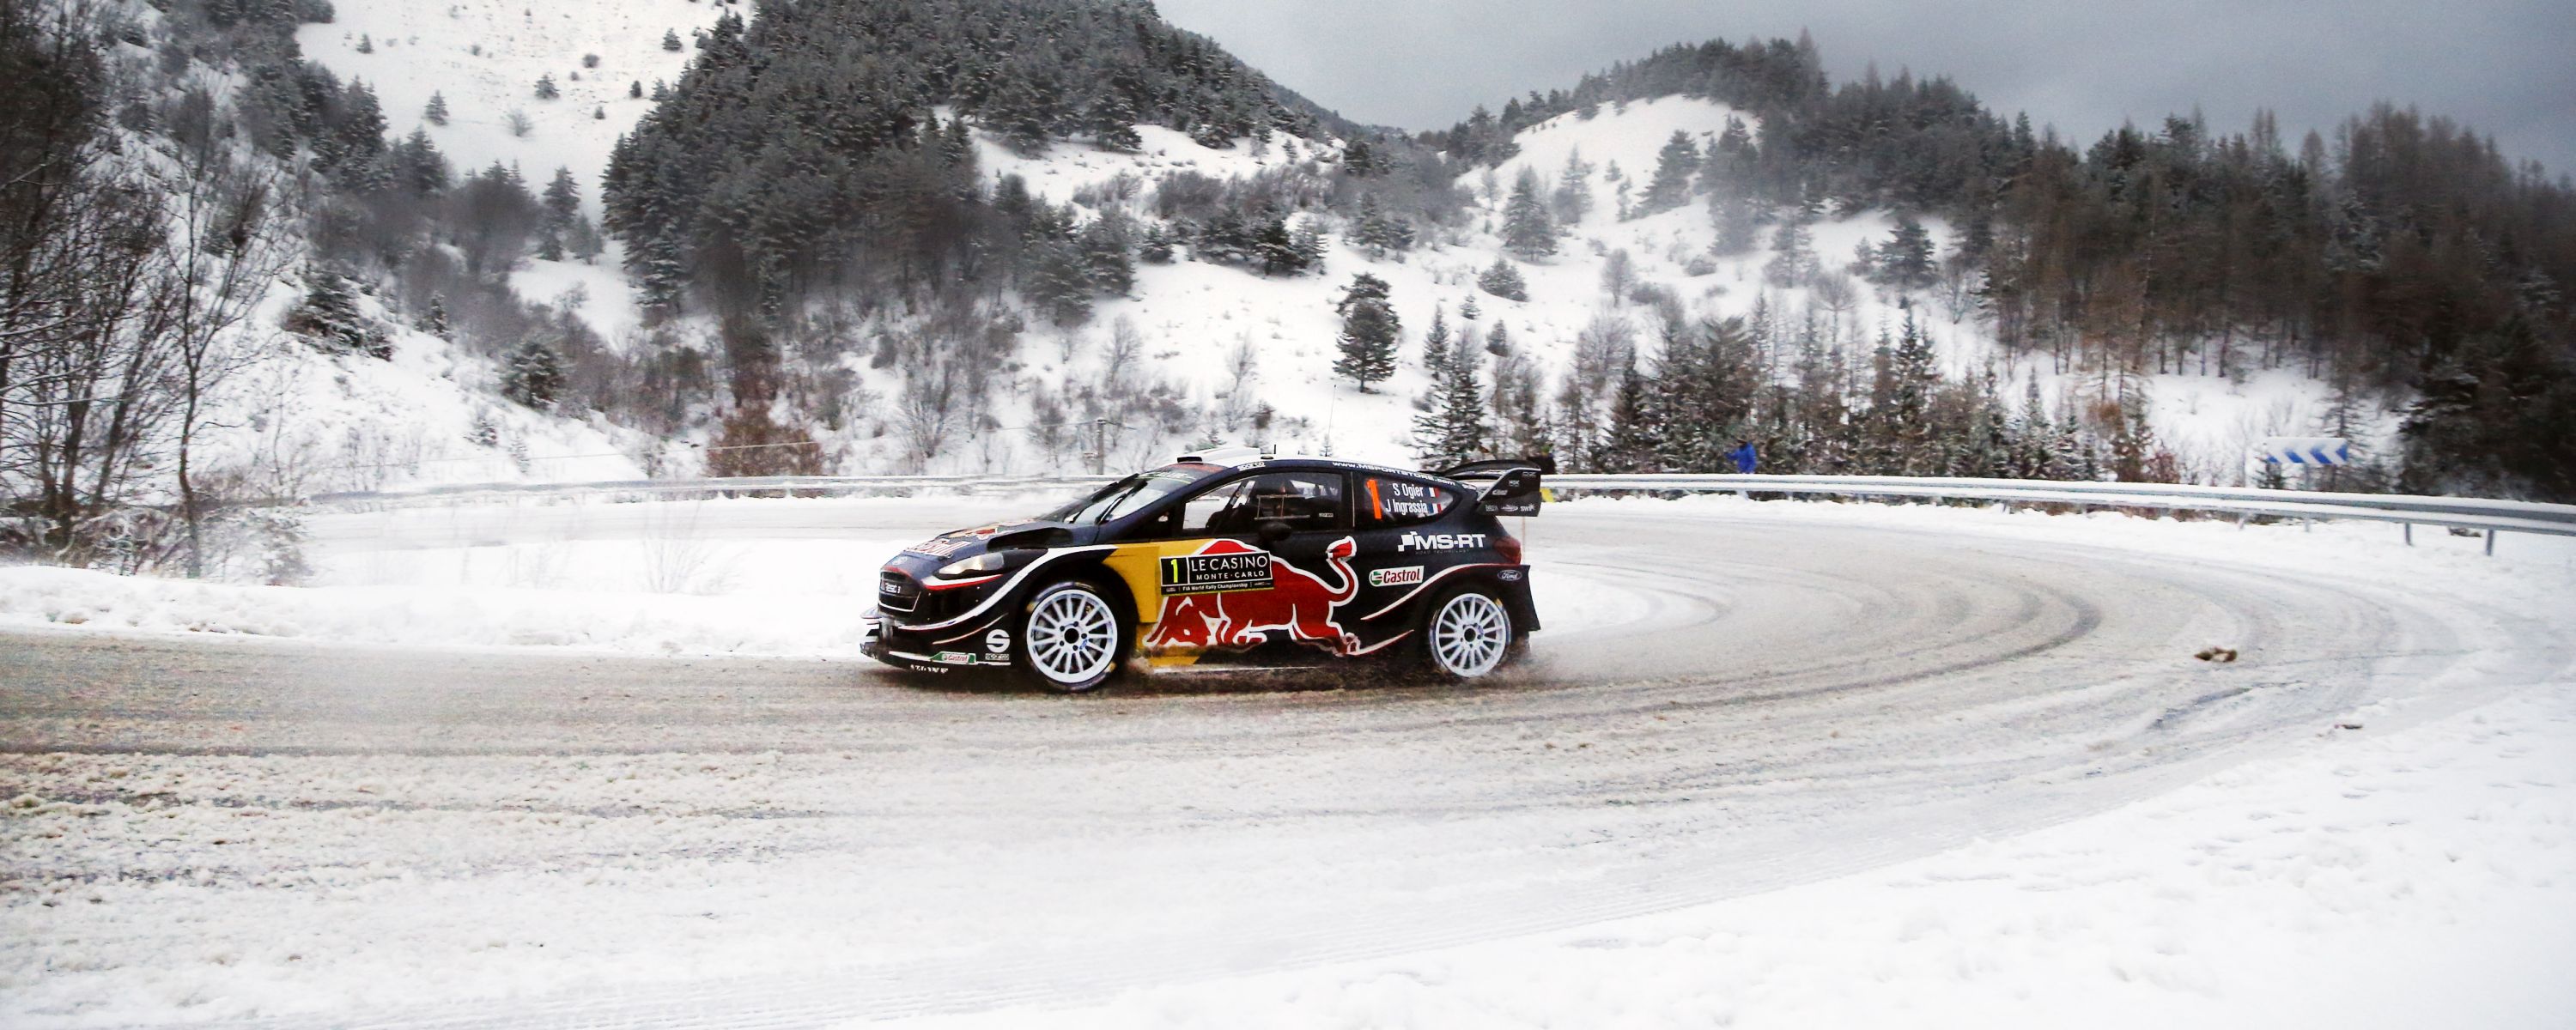 FIA WORLD RALLY CHAMPIONSHIP 2018 -WRC Monte Carlo (FRA) -  WRC 24/01/2018 to 28/01/2018 - PHOTO : @World